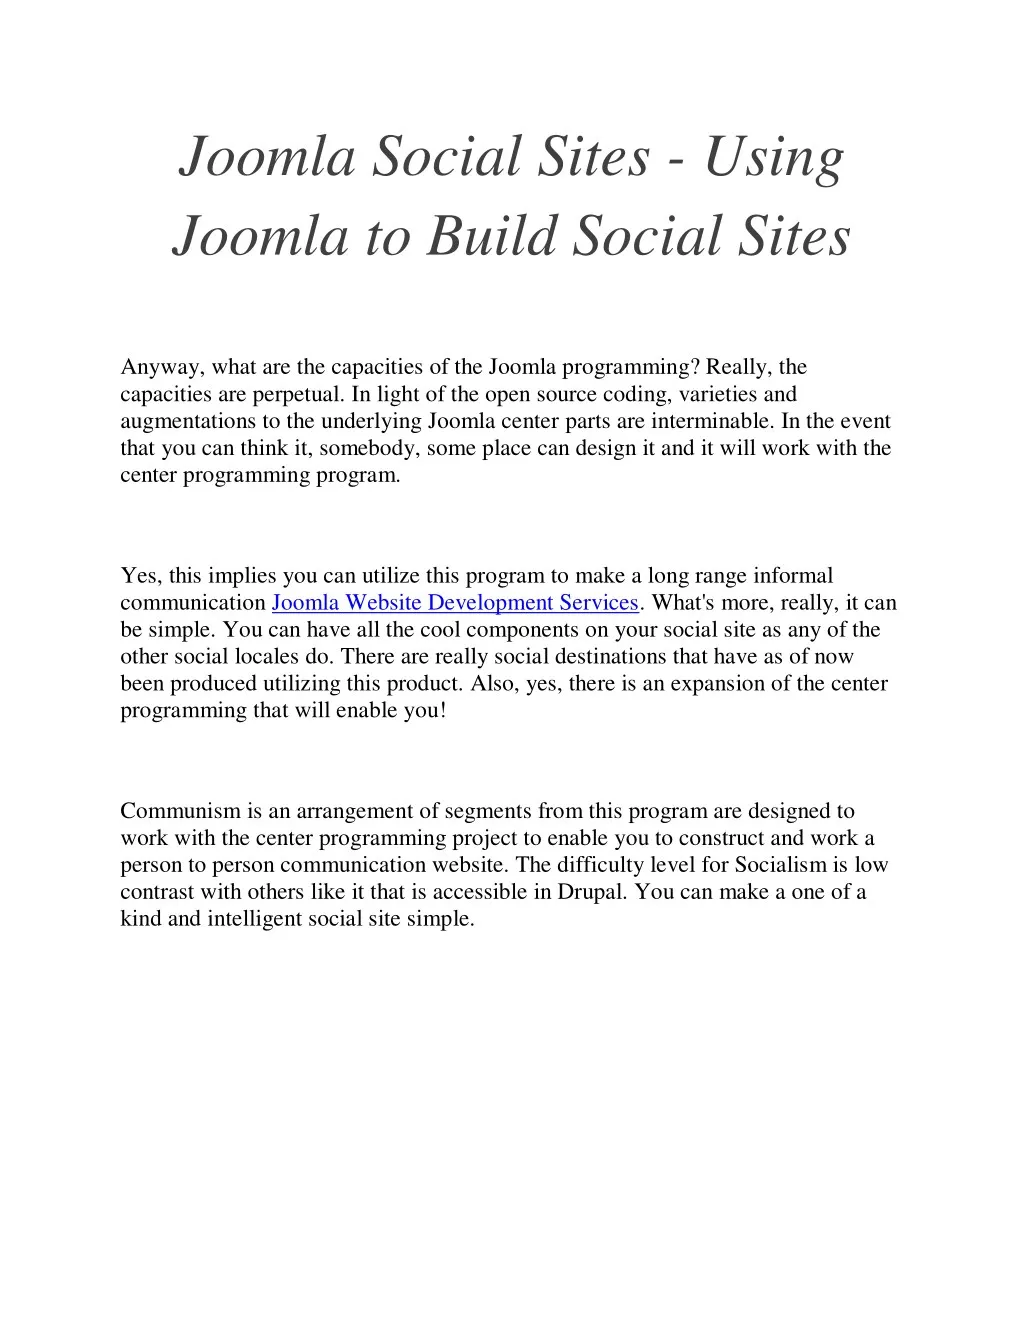 joomla social sites using joomla to build social